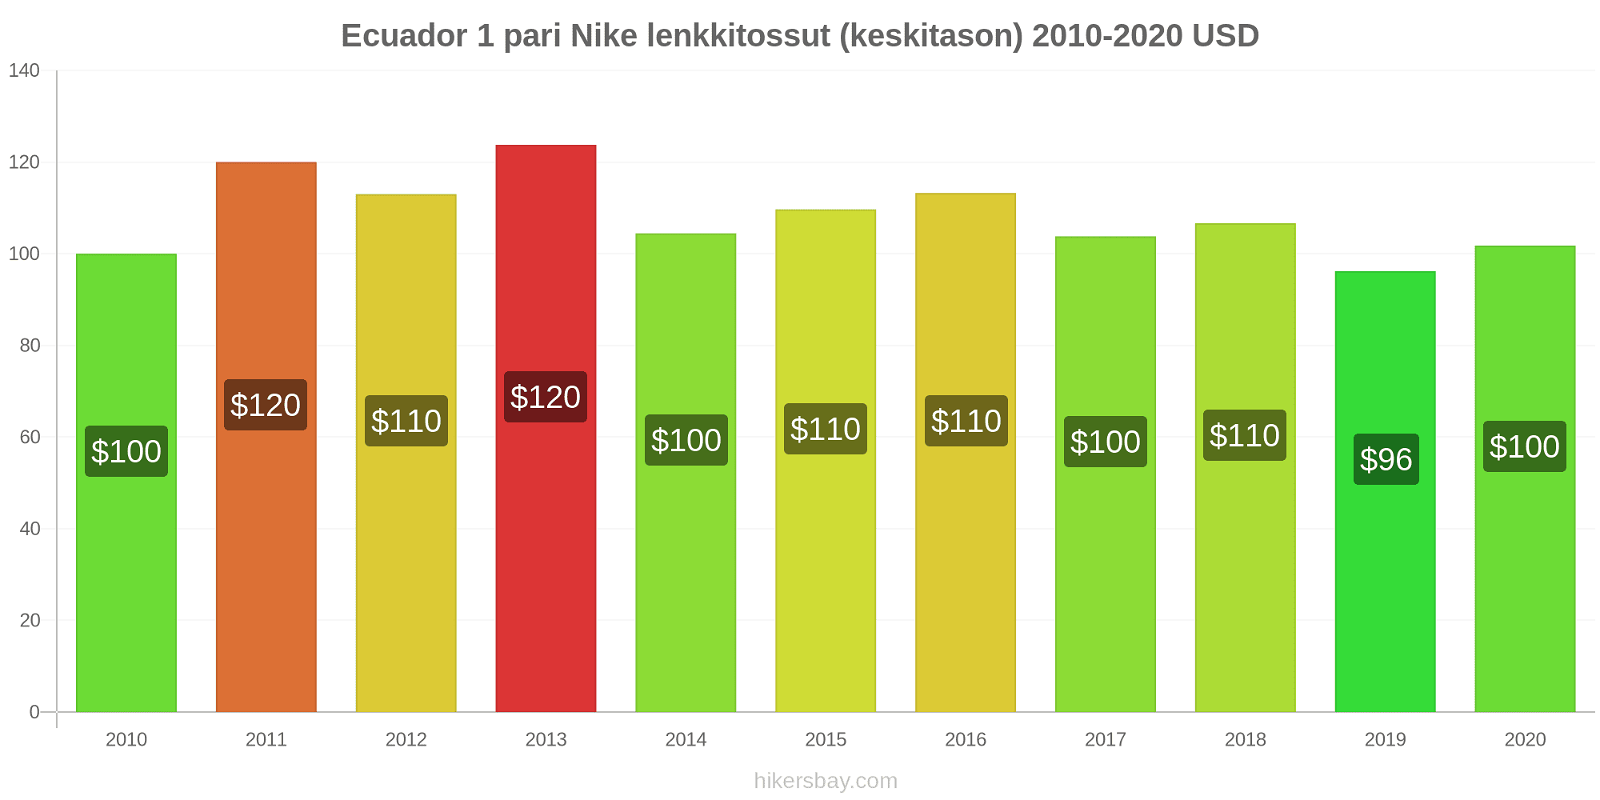 Ecuador hintojen muutokset 1 pari Nike lenkkitossut (keskitason) hikersbay.com